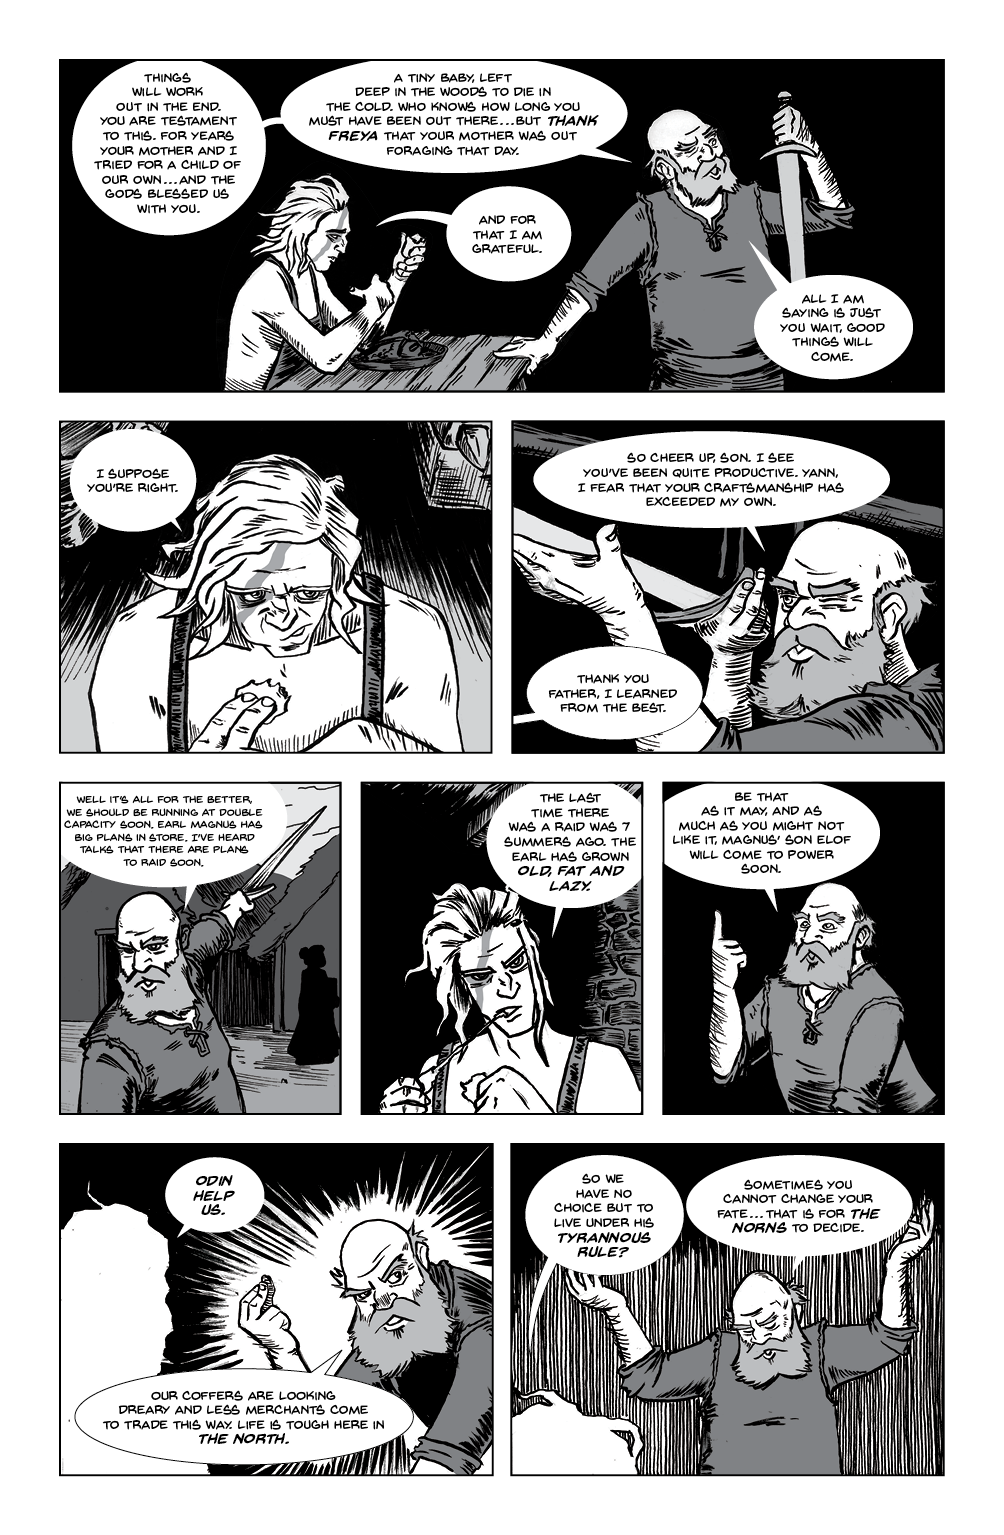 viking comic Graphic Novel ink Drawing  ILLUSTRATION  Original Art story epic brushes